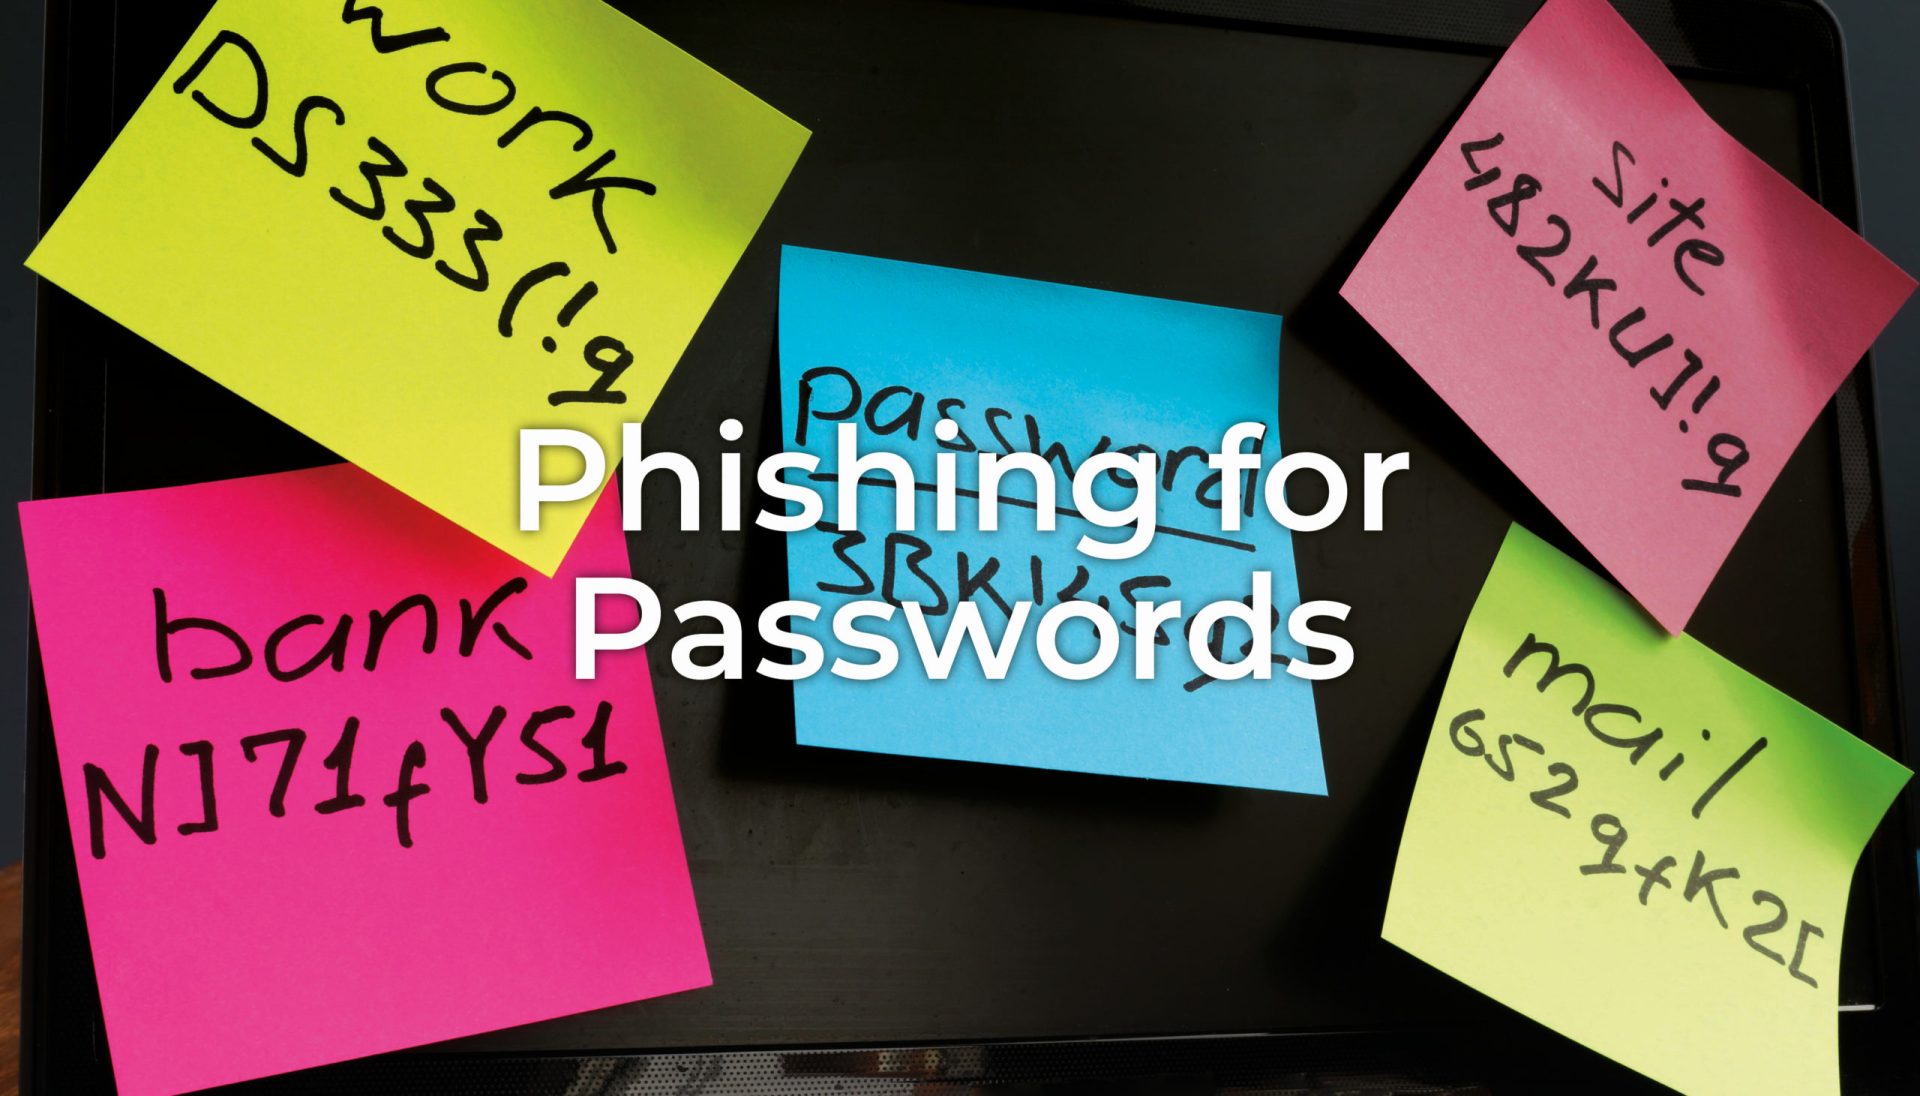 Phishing for Passwords